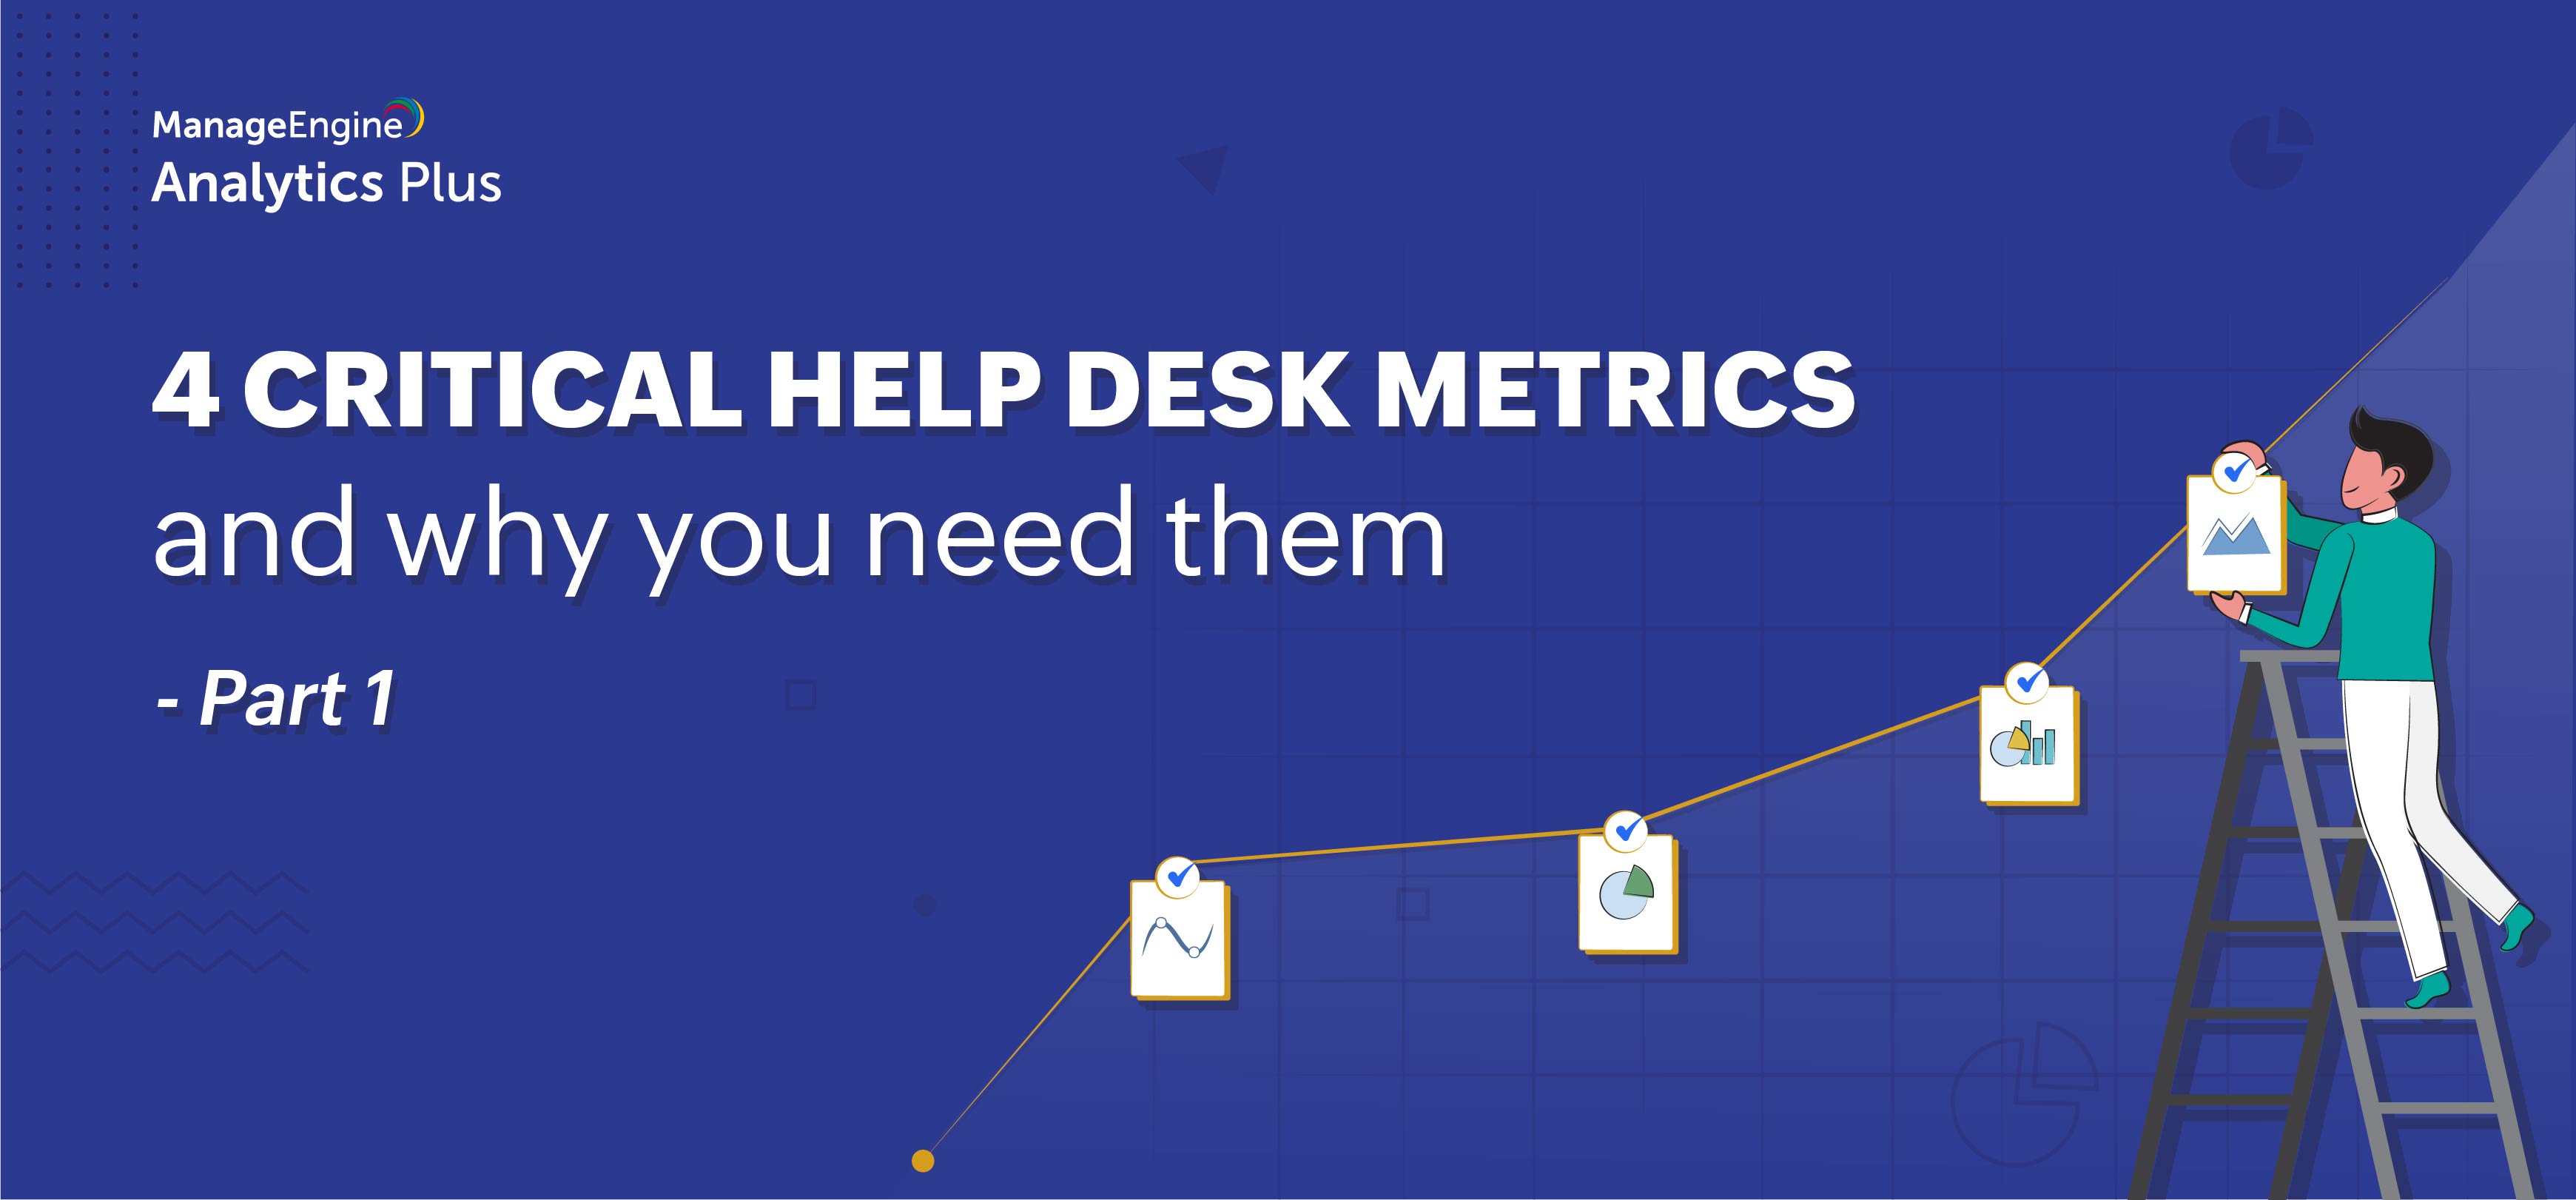 Critical help desk metrics